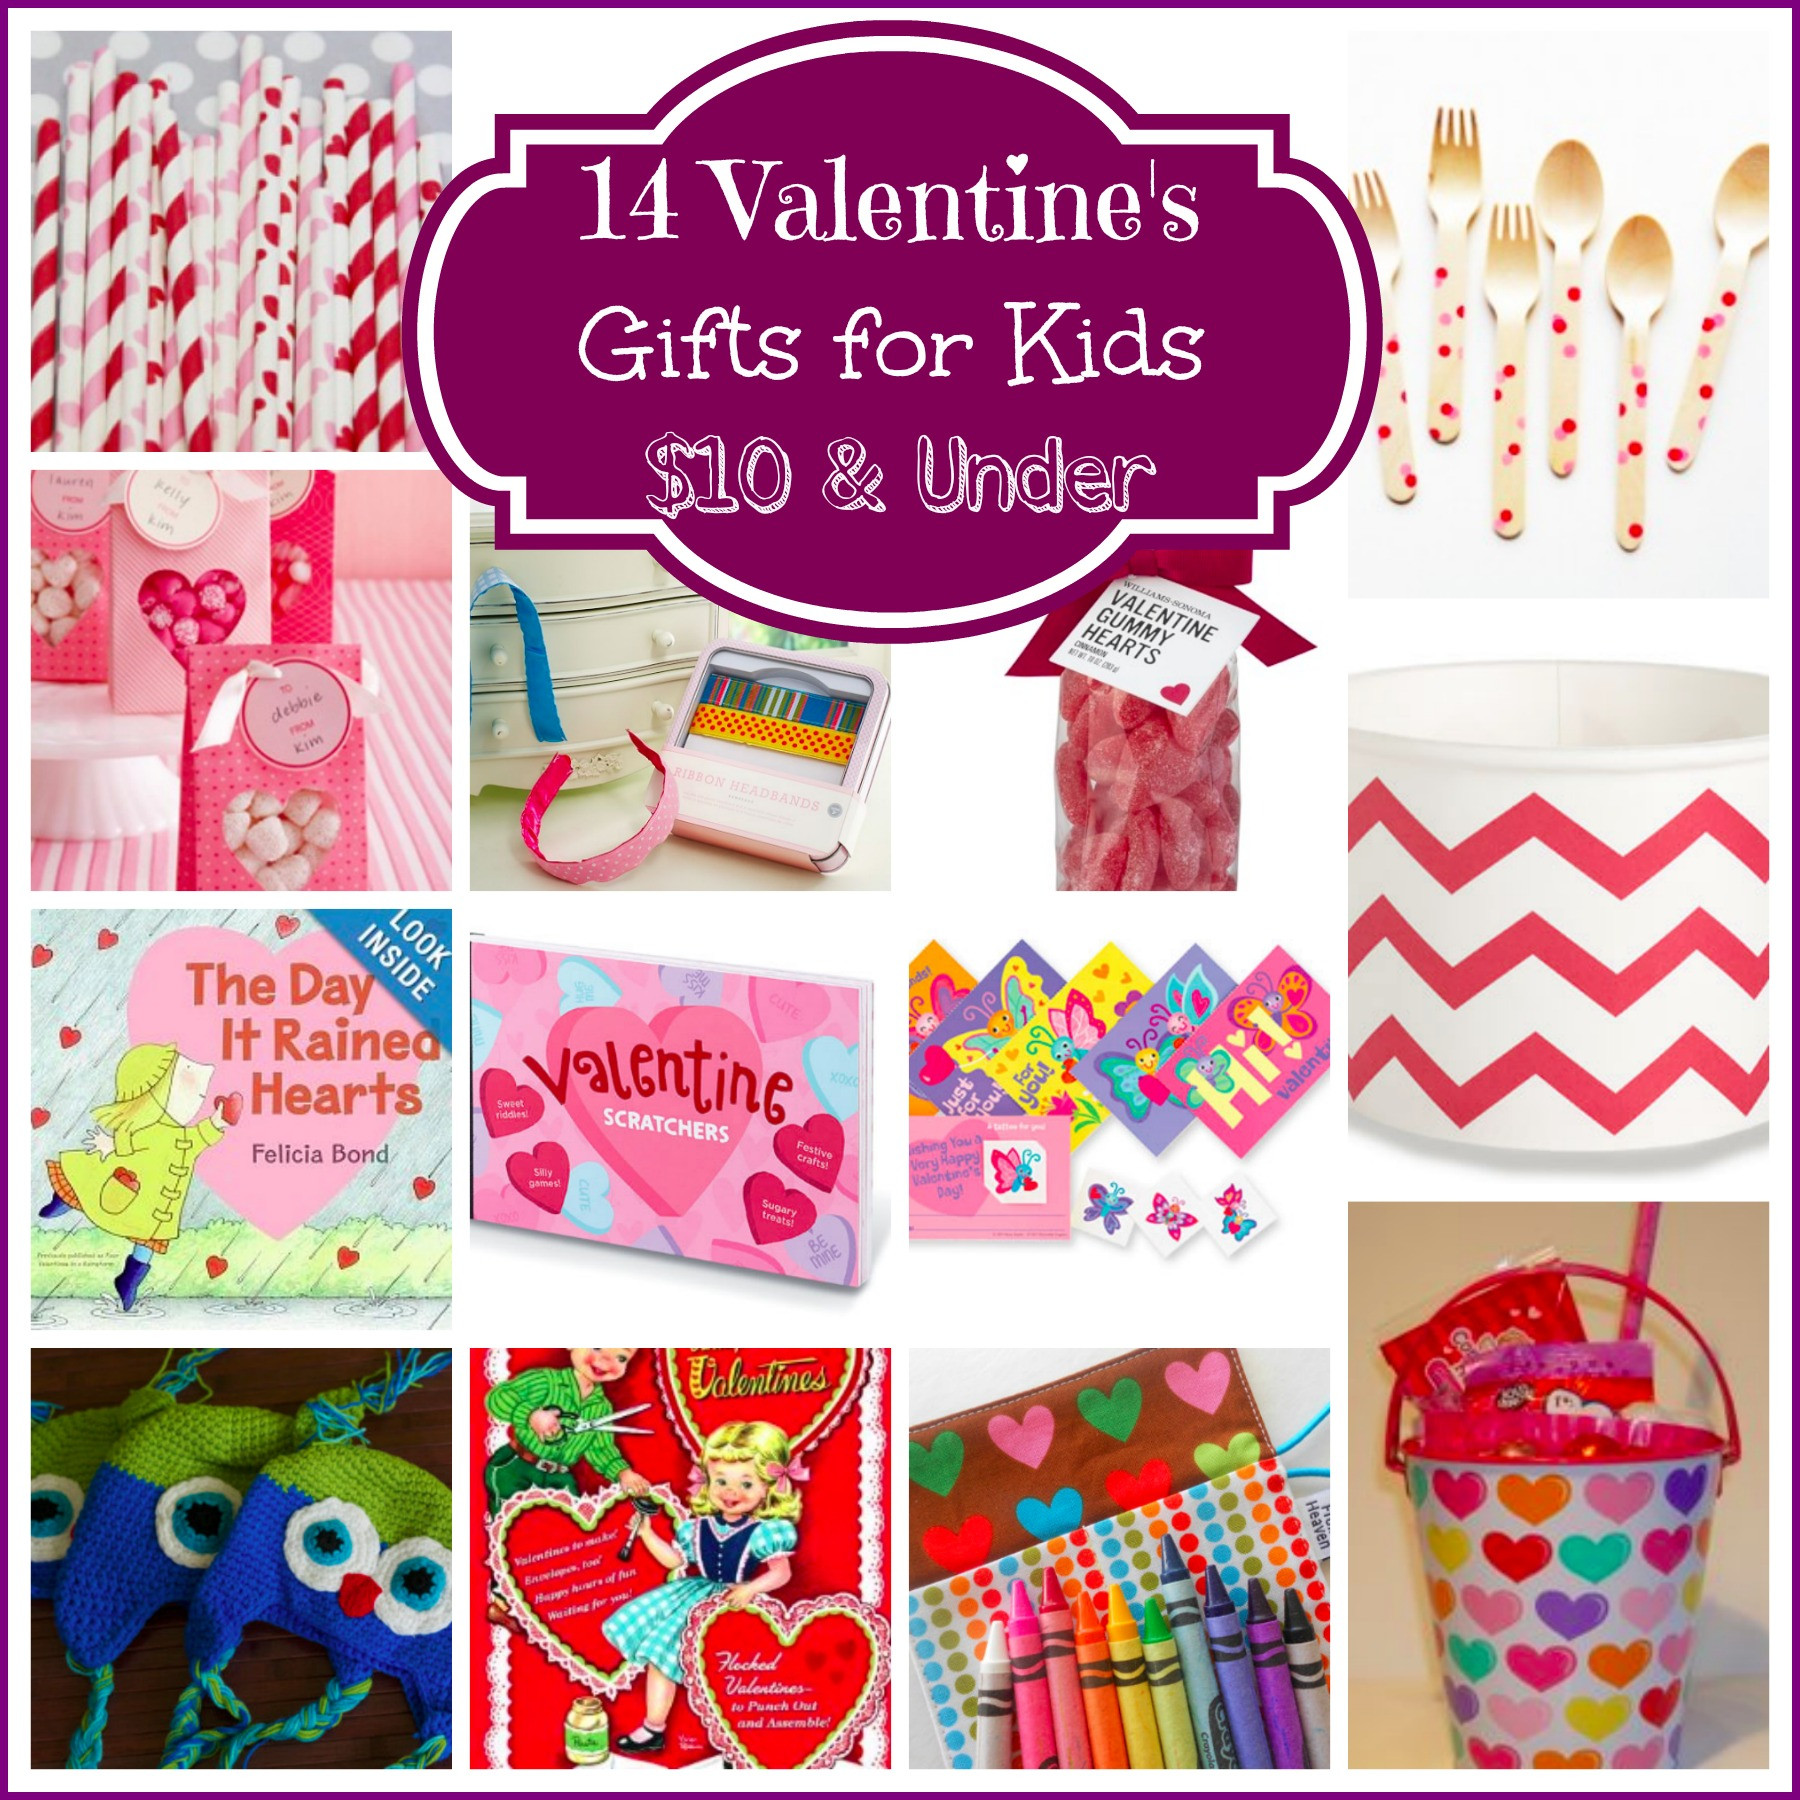 Toddler Valentines Day Gift Ideas
 14 Valentine’s Day Gifts for Kids $10 & Under